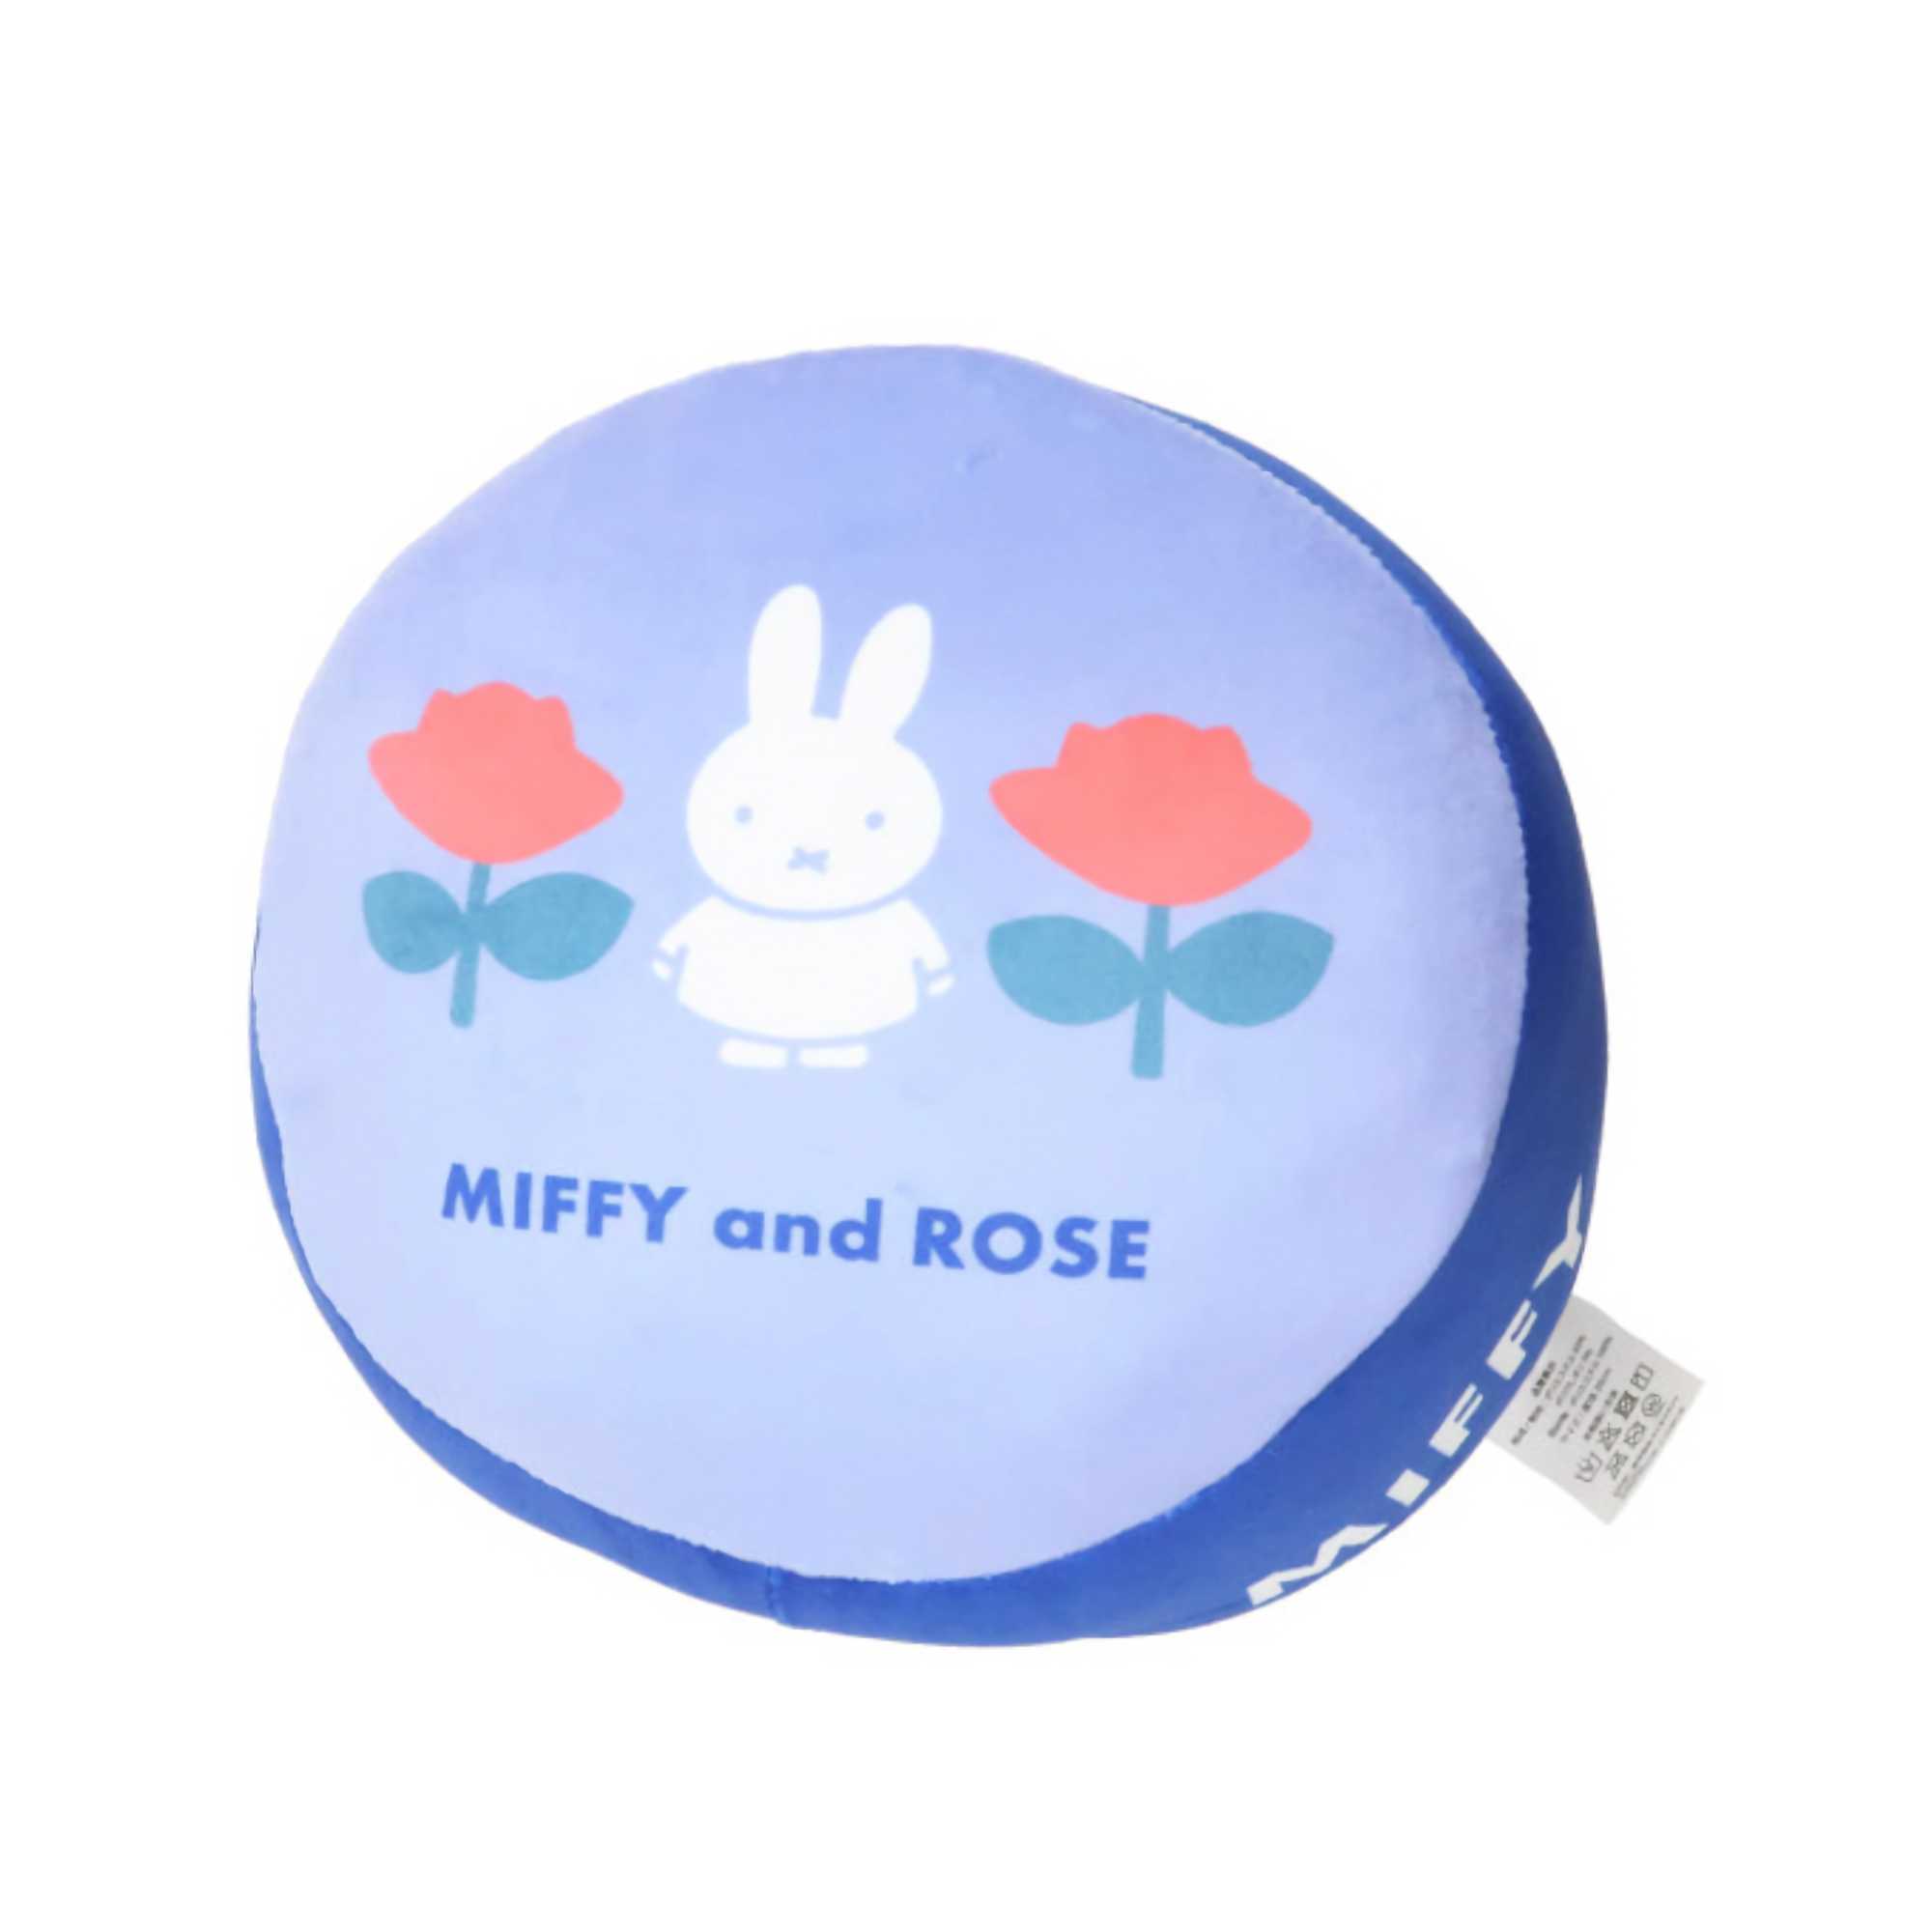 Miffy and Rose Round Cushion